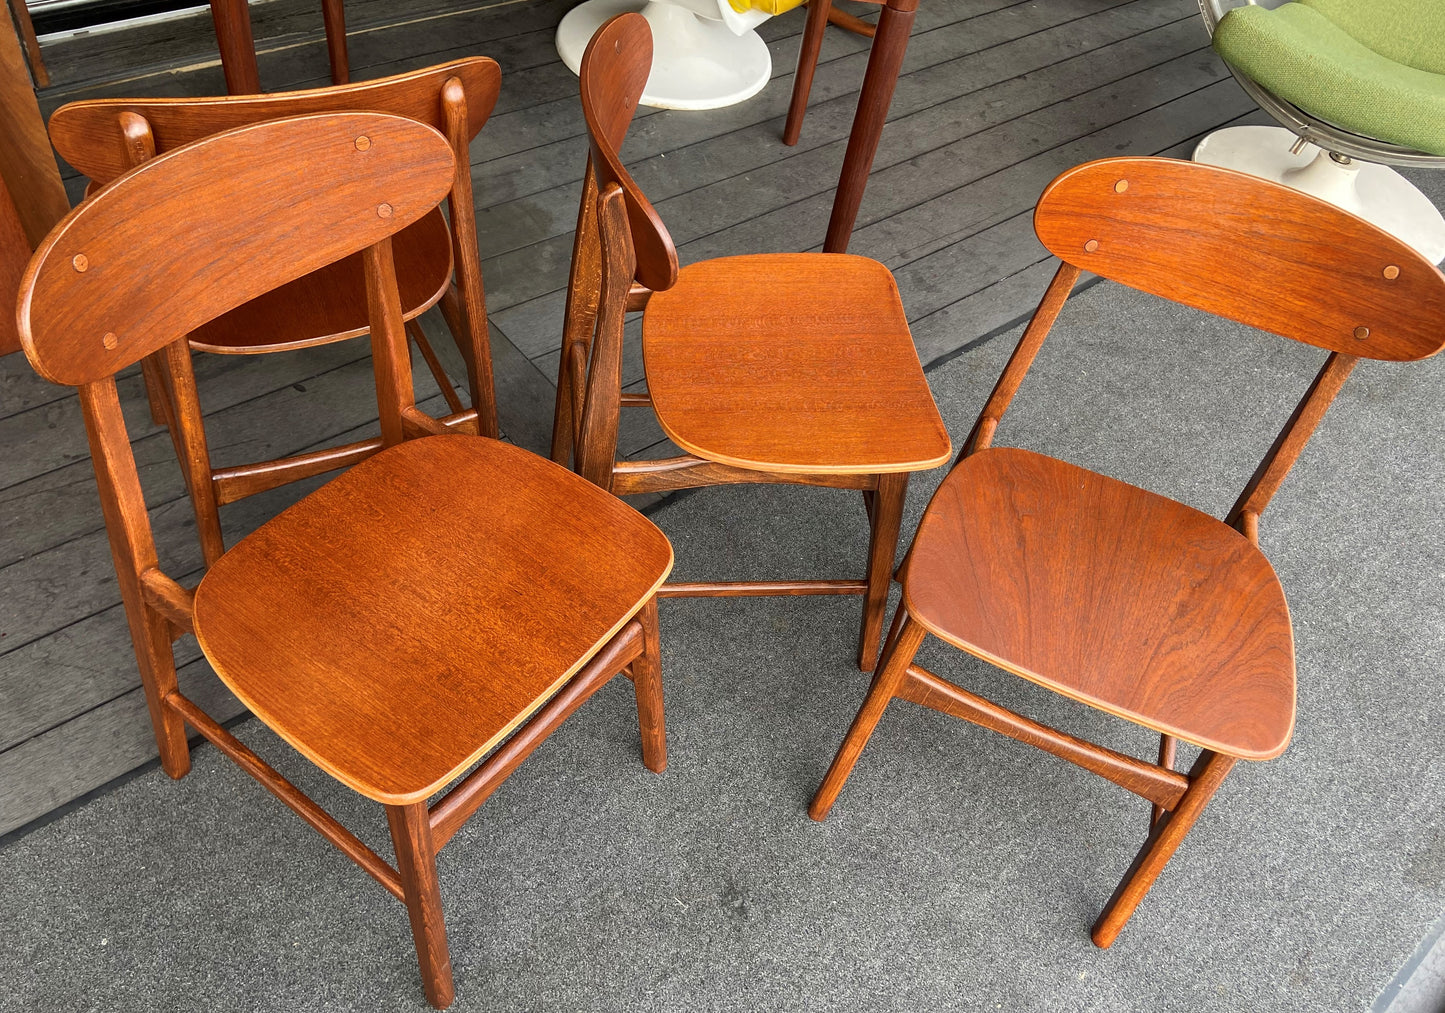 4 REFINISHED Danish Mid Century Modern Teak Chairs by Borge Mogensen